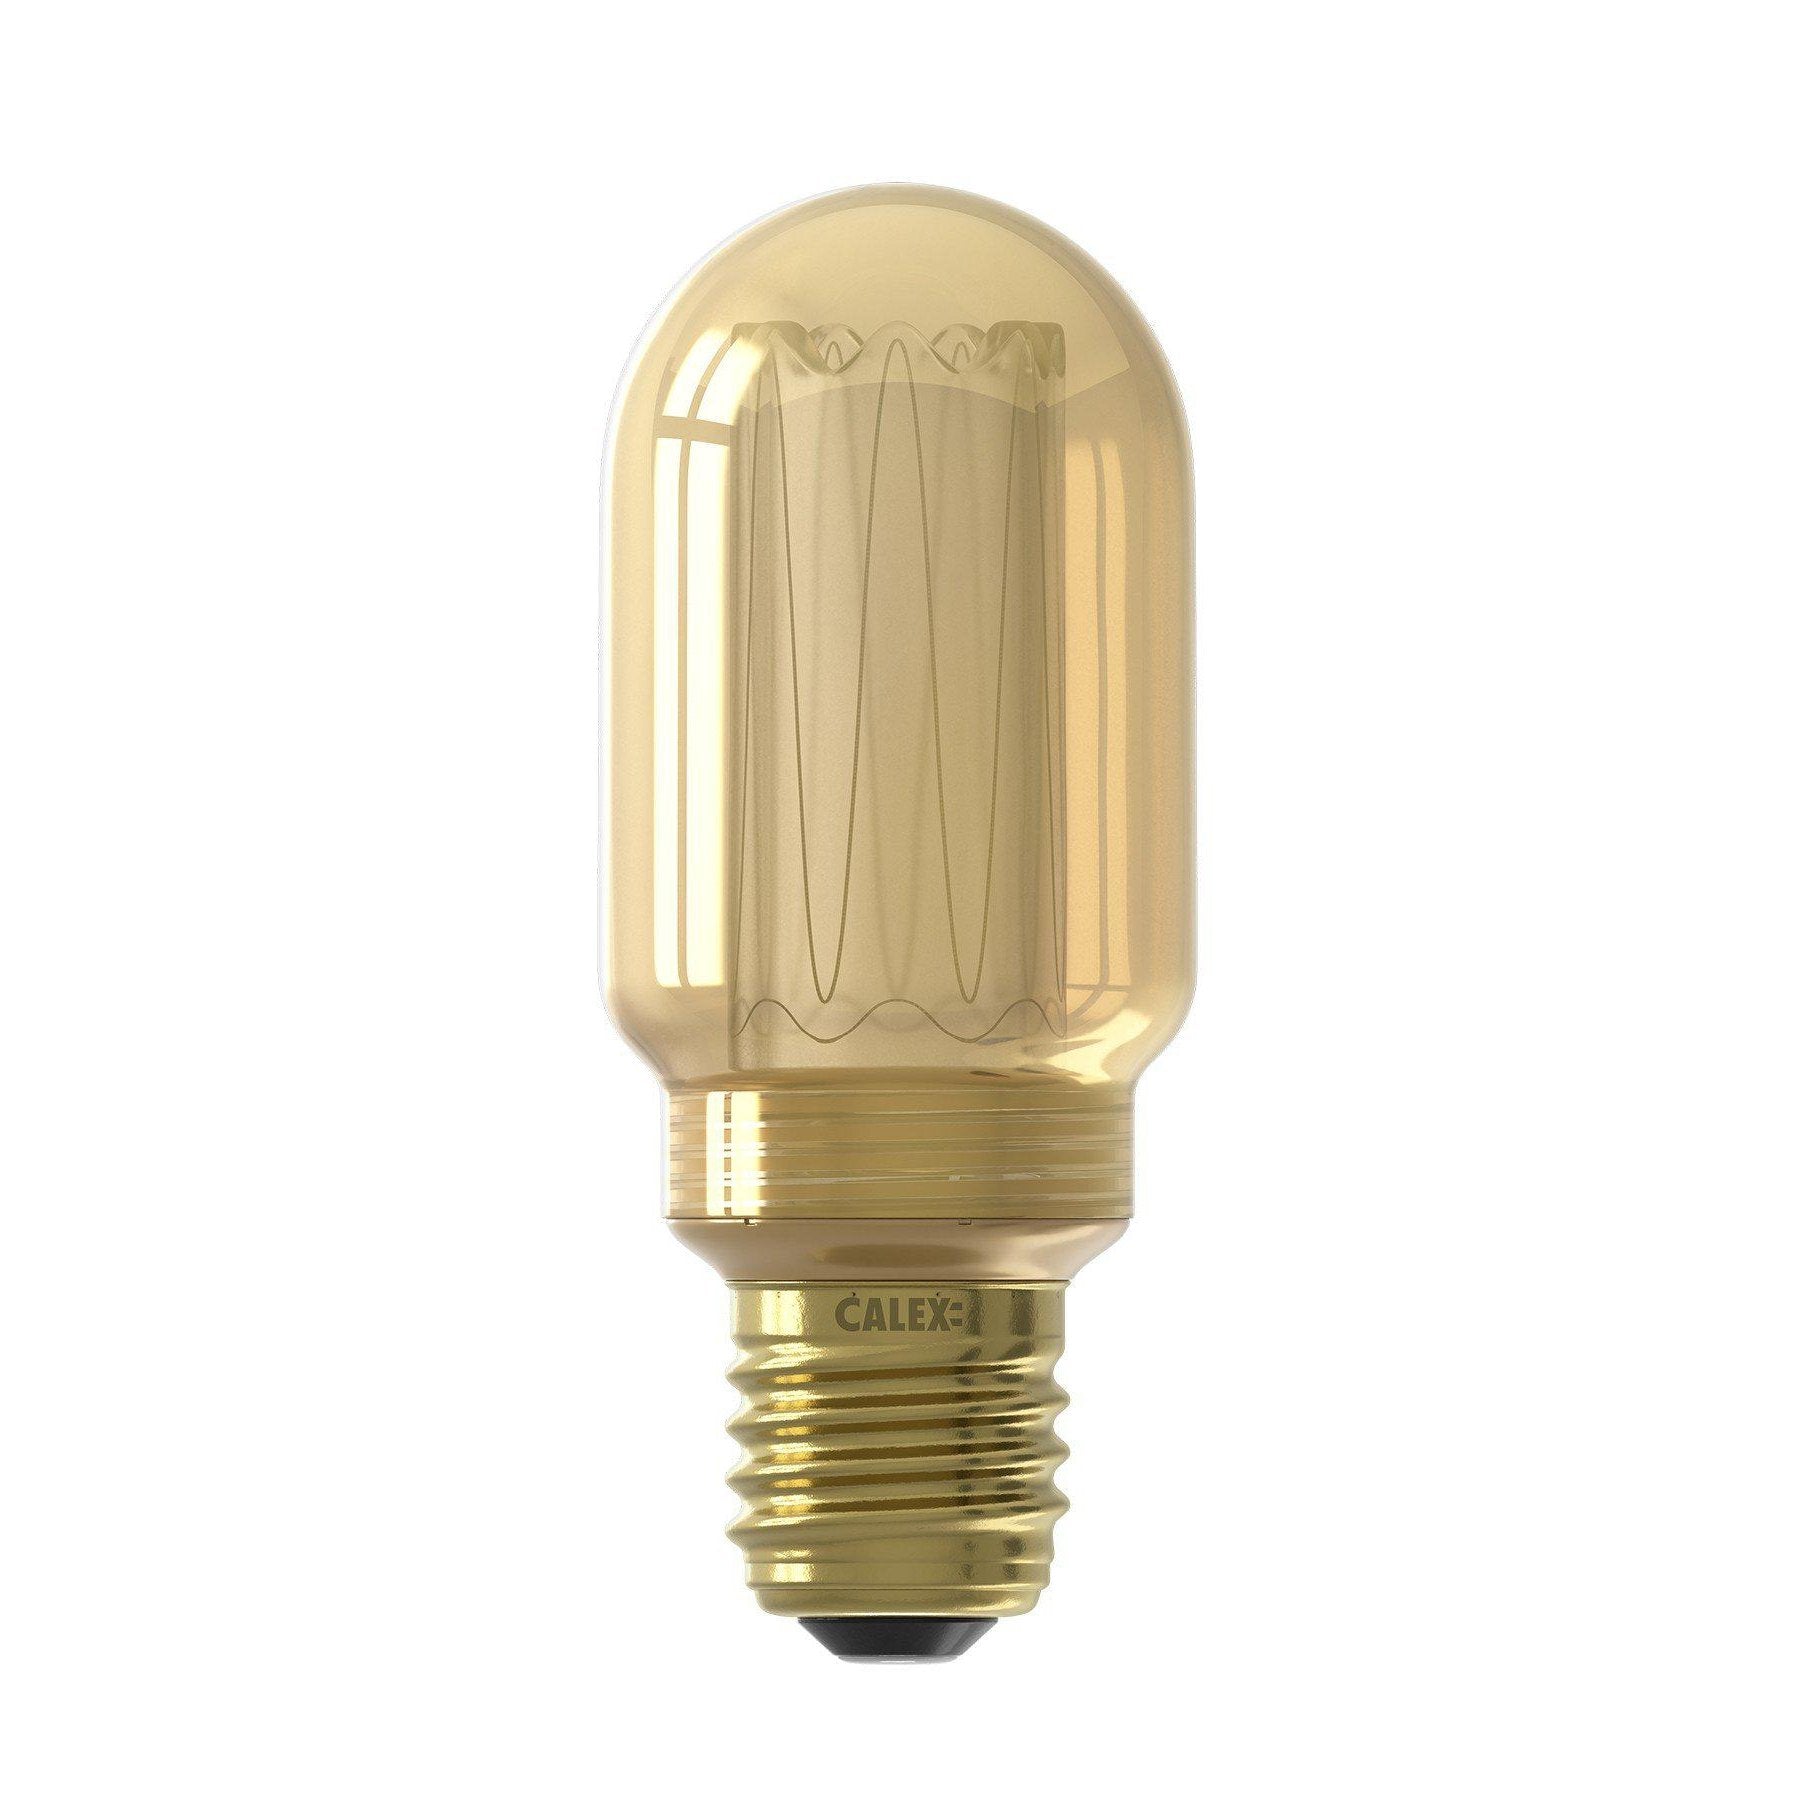 Calex. Led glassfiber. Buislamp 3.5W. Gold. Dimbaar